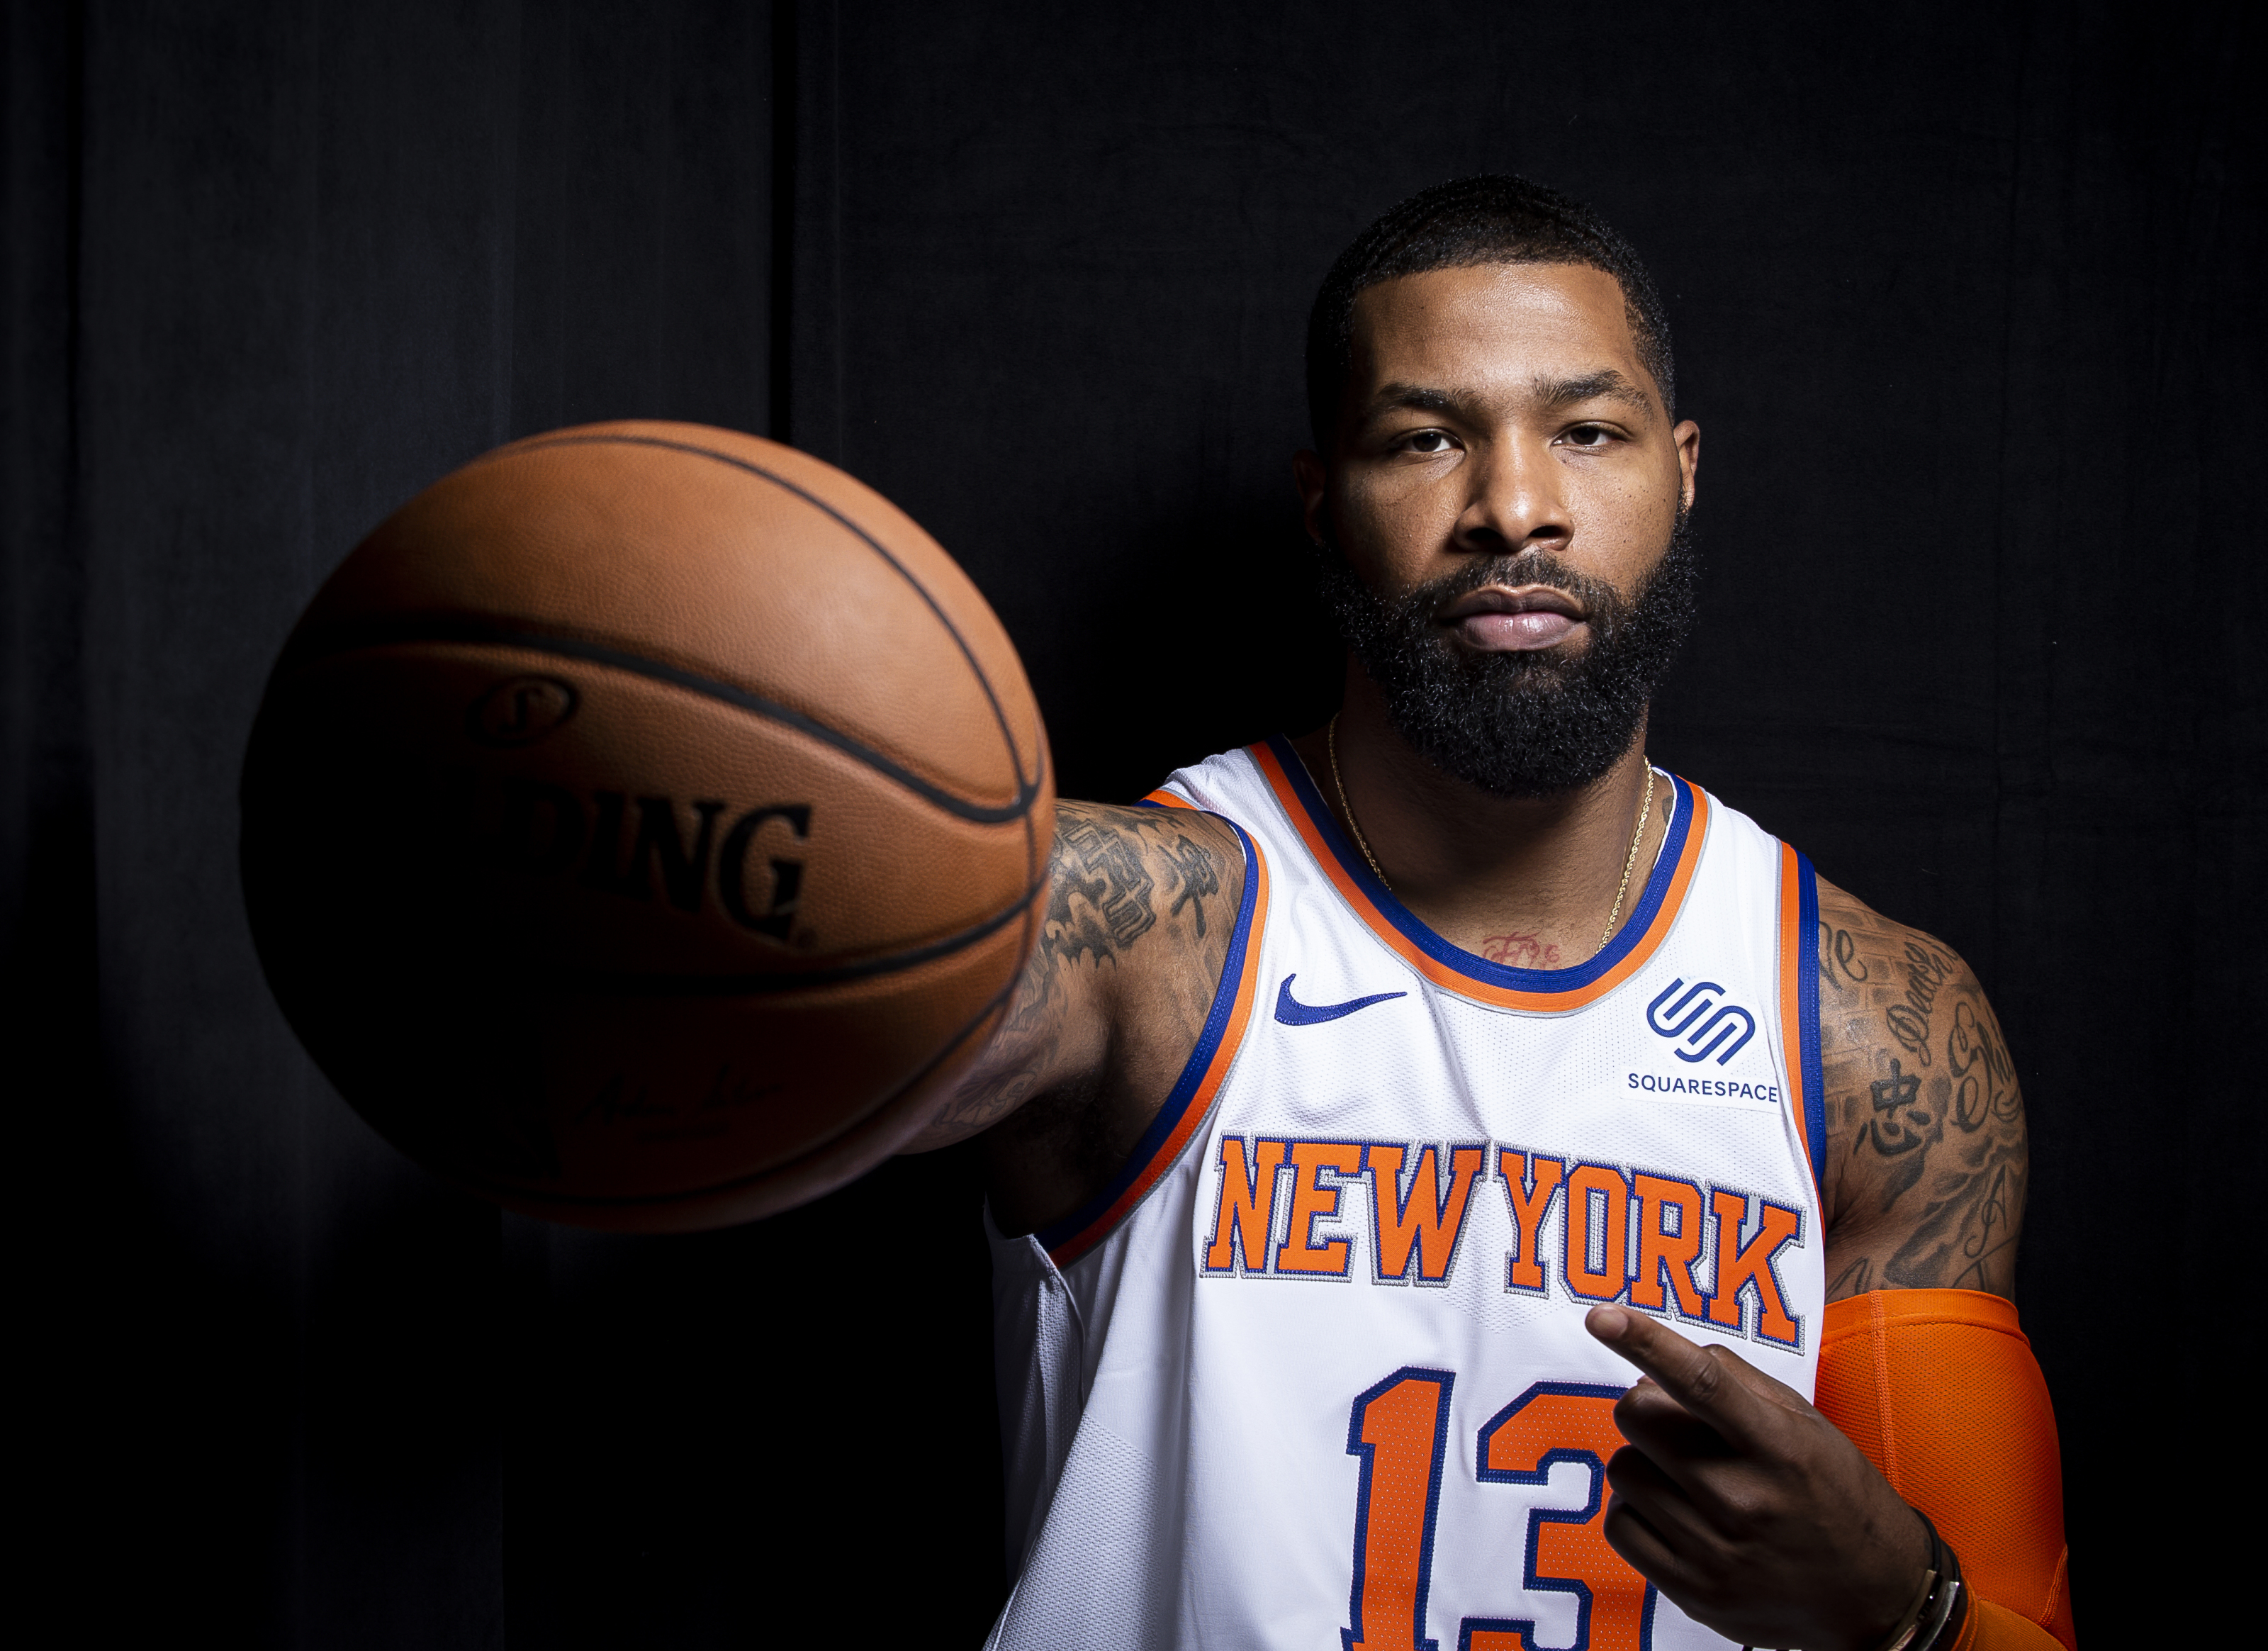 New York Knicks Basketball Mesh Jersey for Dogs, Medium